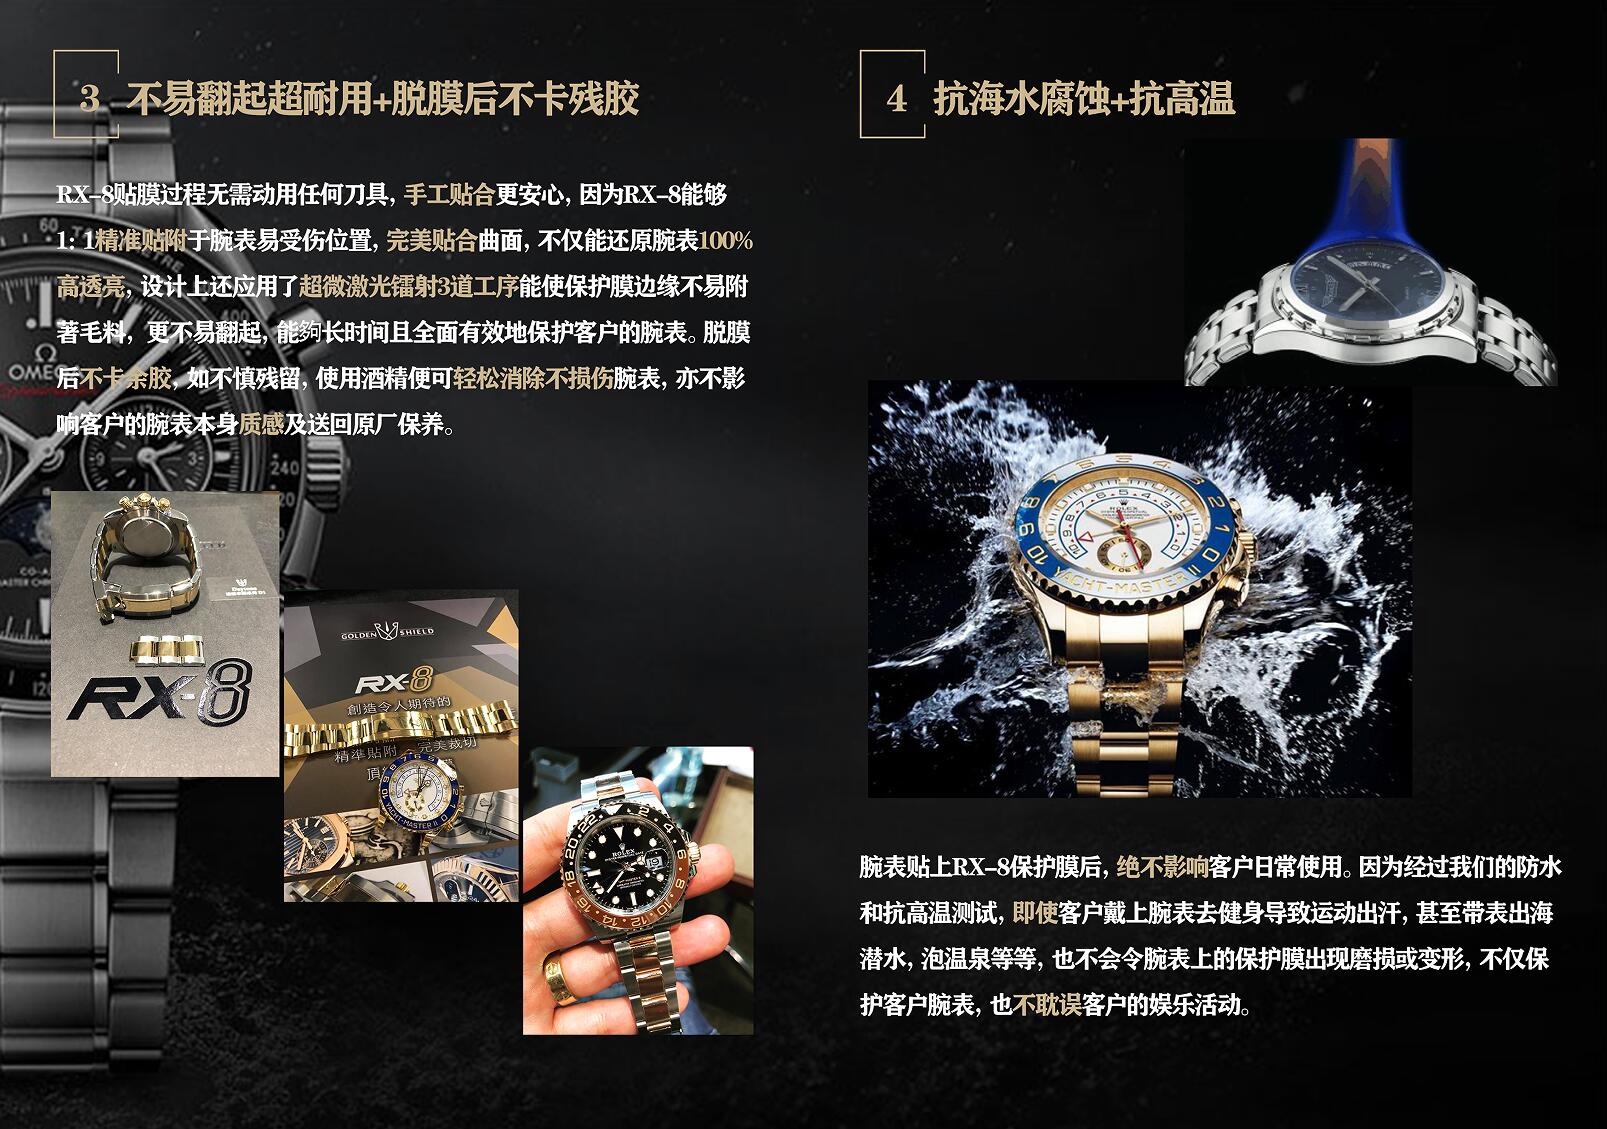 RX-8手表贴膜适用于126655劳力士游艇40mm胶带款 外表圈表盘表扣